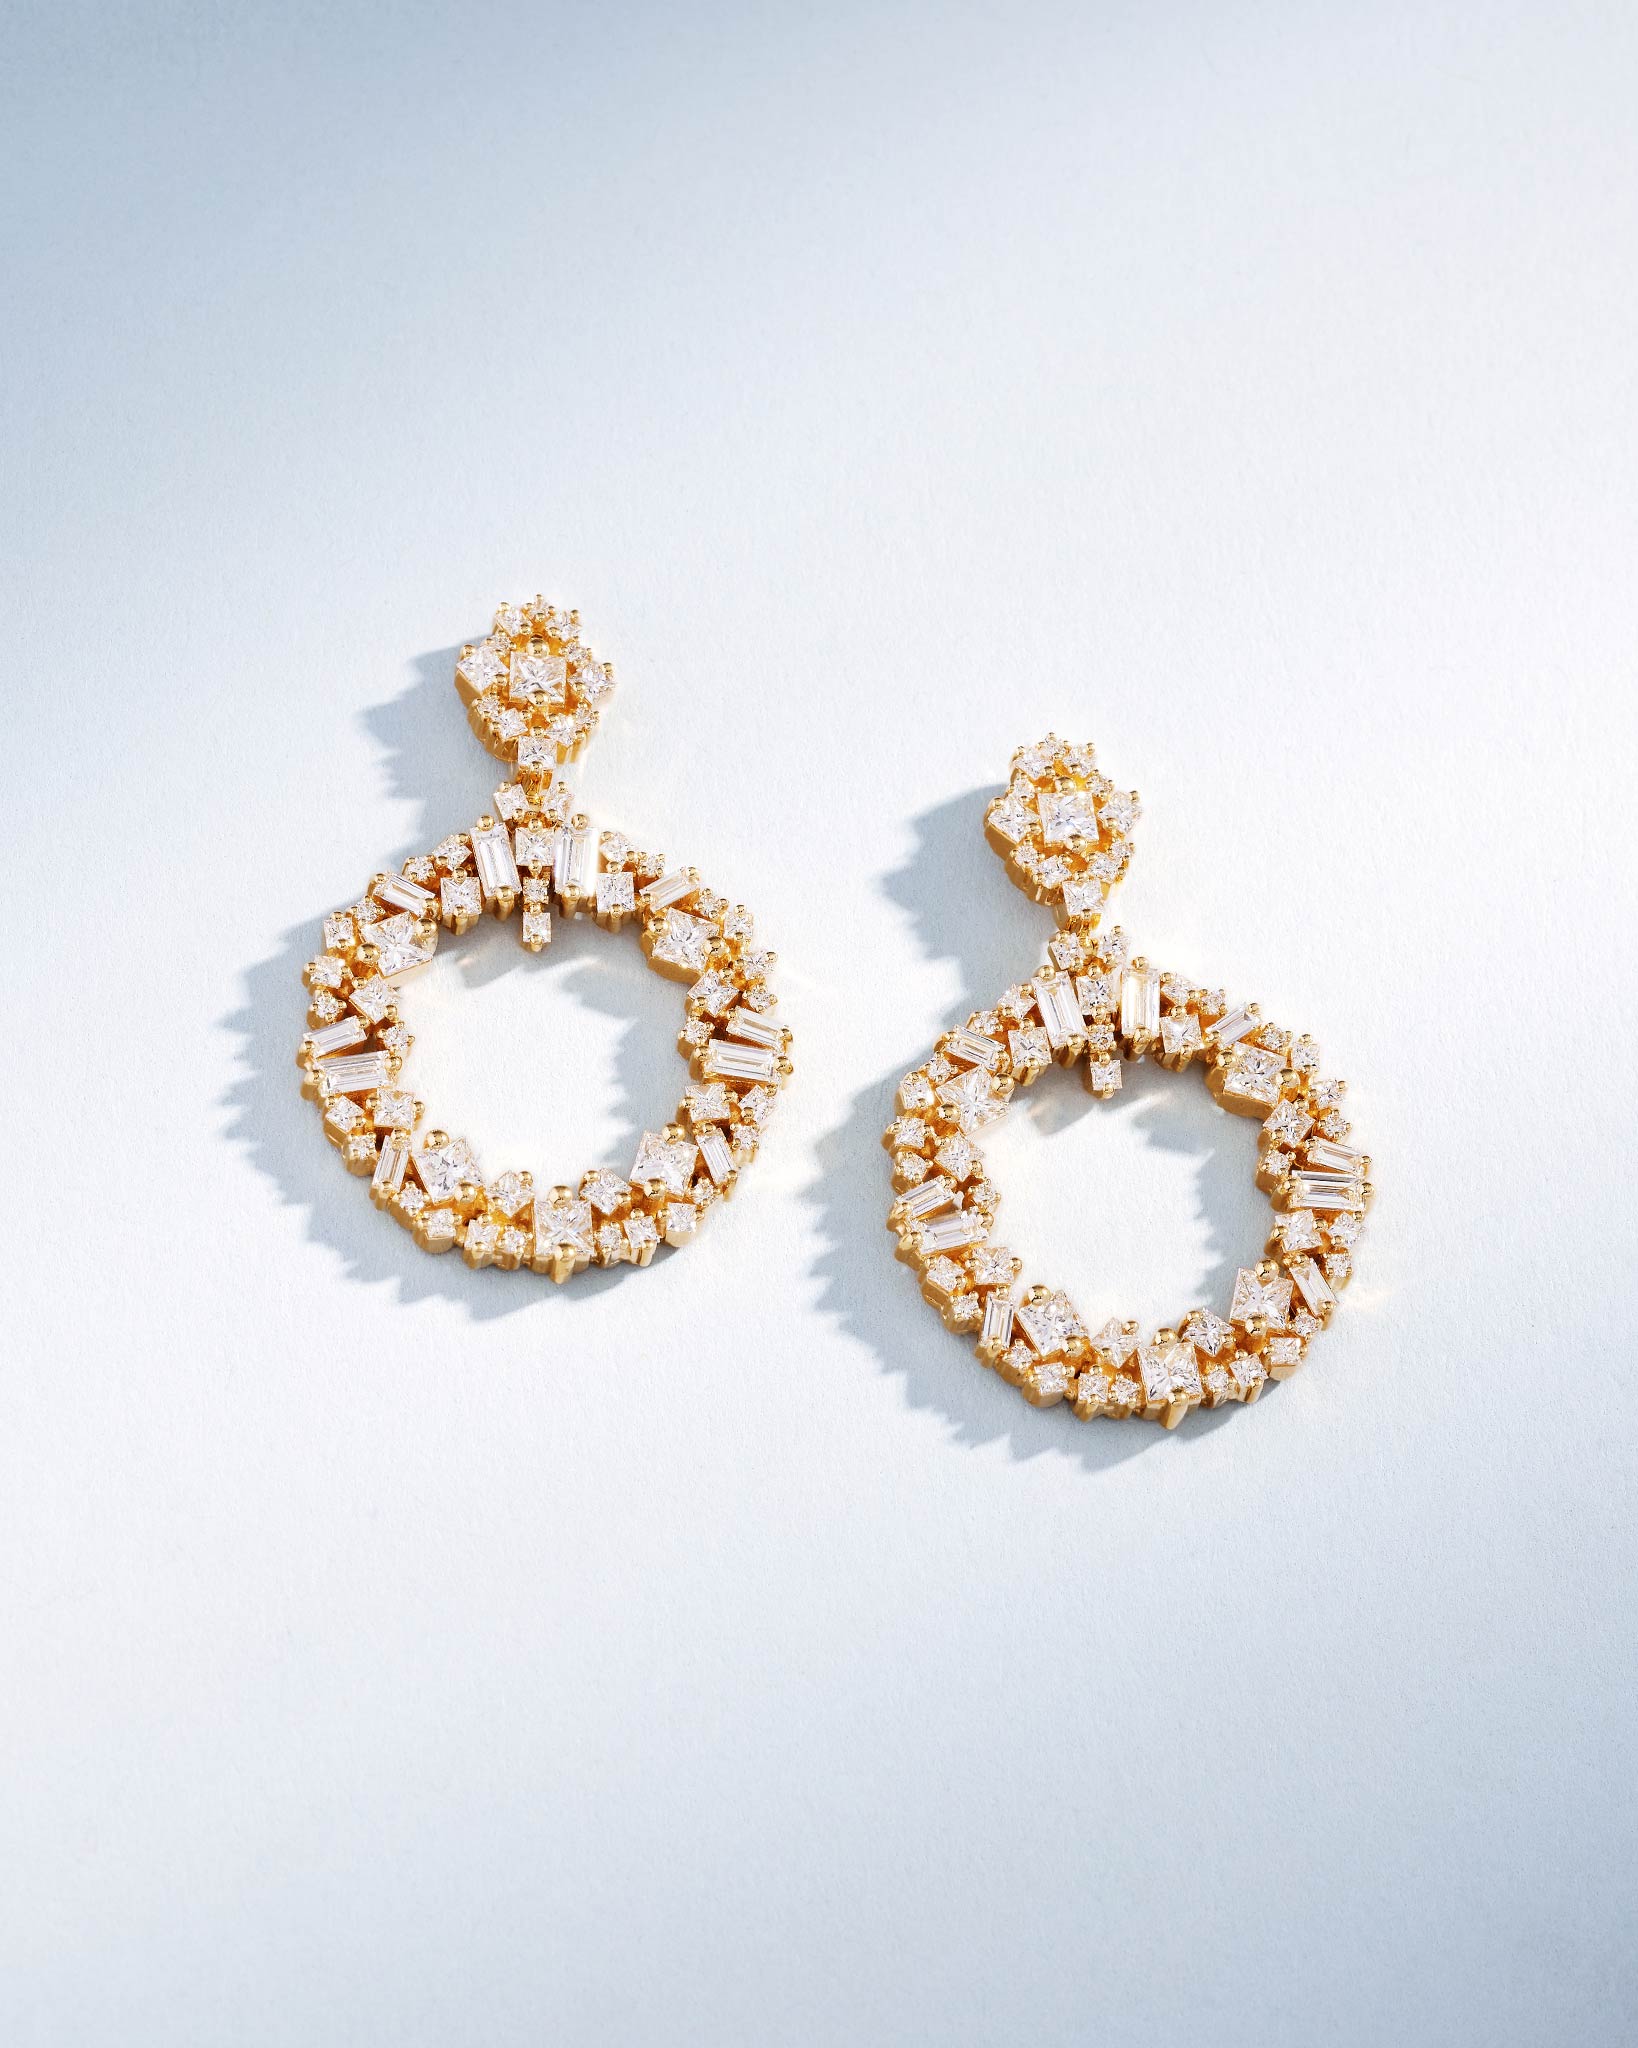 Suzanne Kalan La Fantaisie Eclipse Diamond Drop Earrings in 18k yellow gold